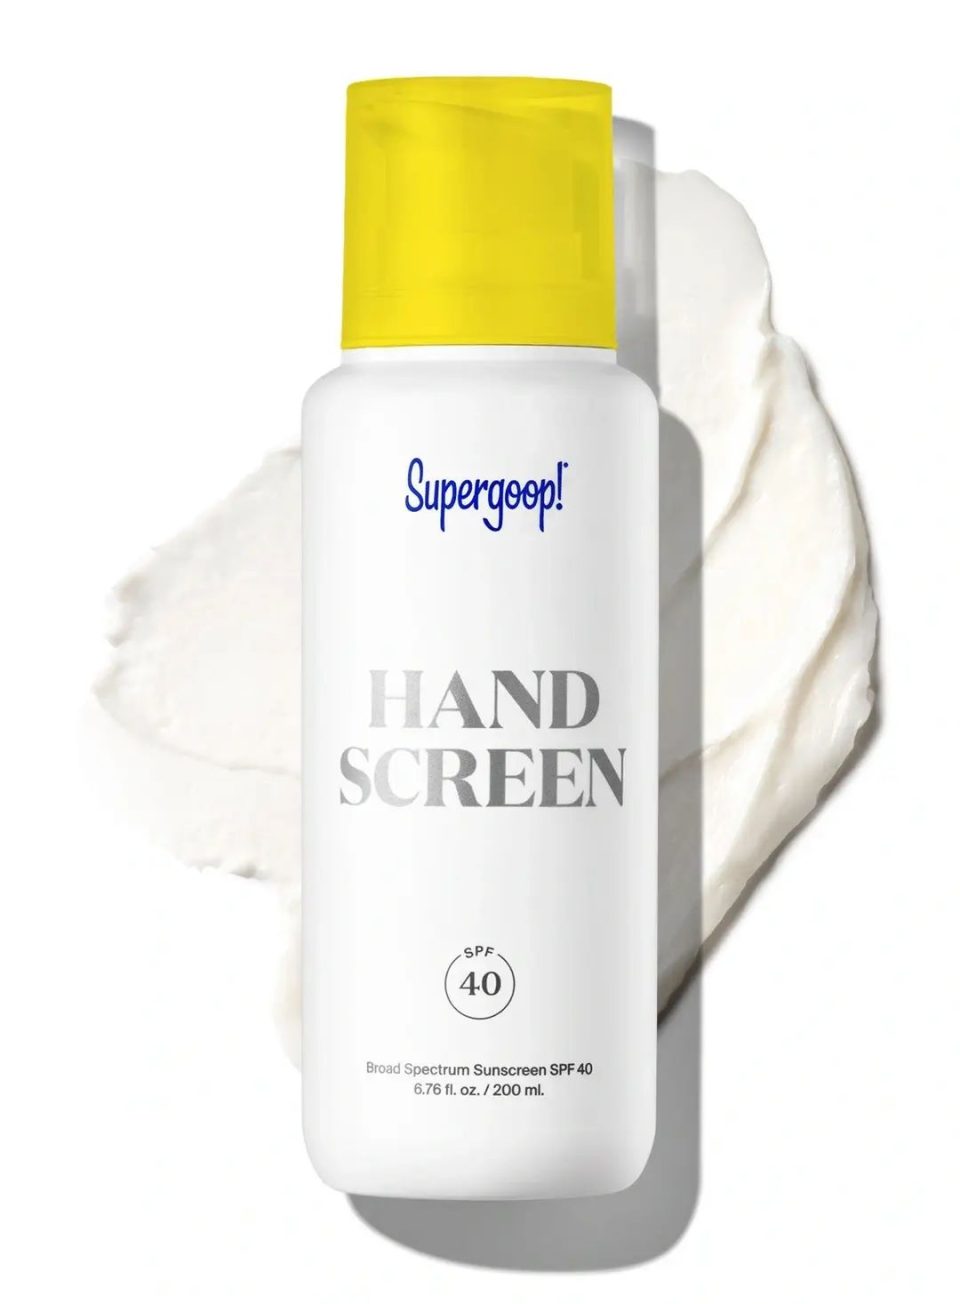 supergoop-handscreen-spf-40-200ml-yellow-cap-pack-and-texture